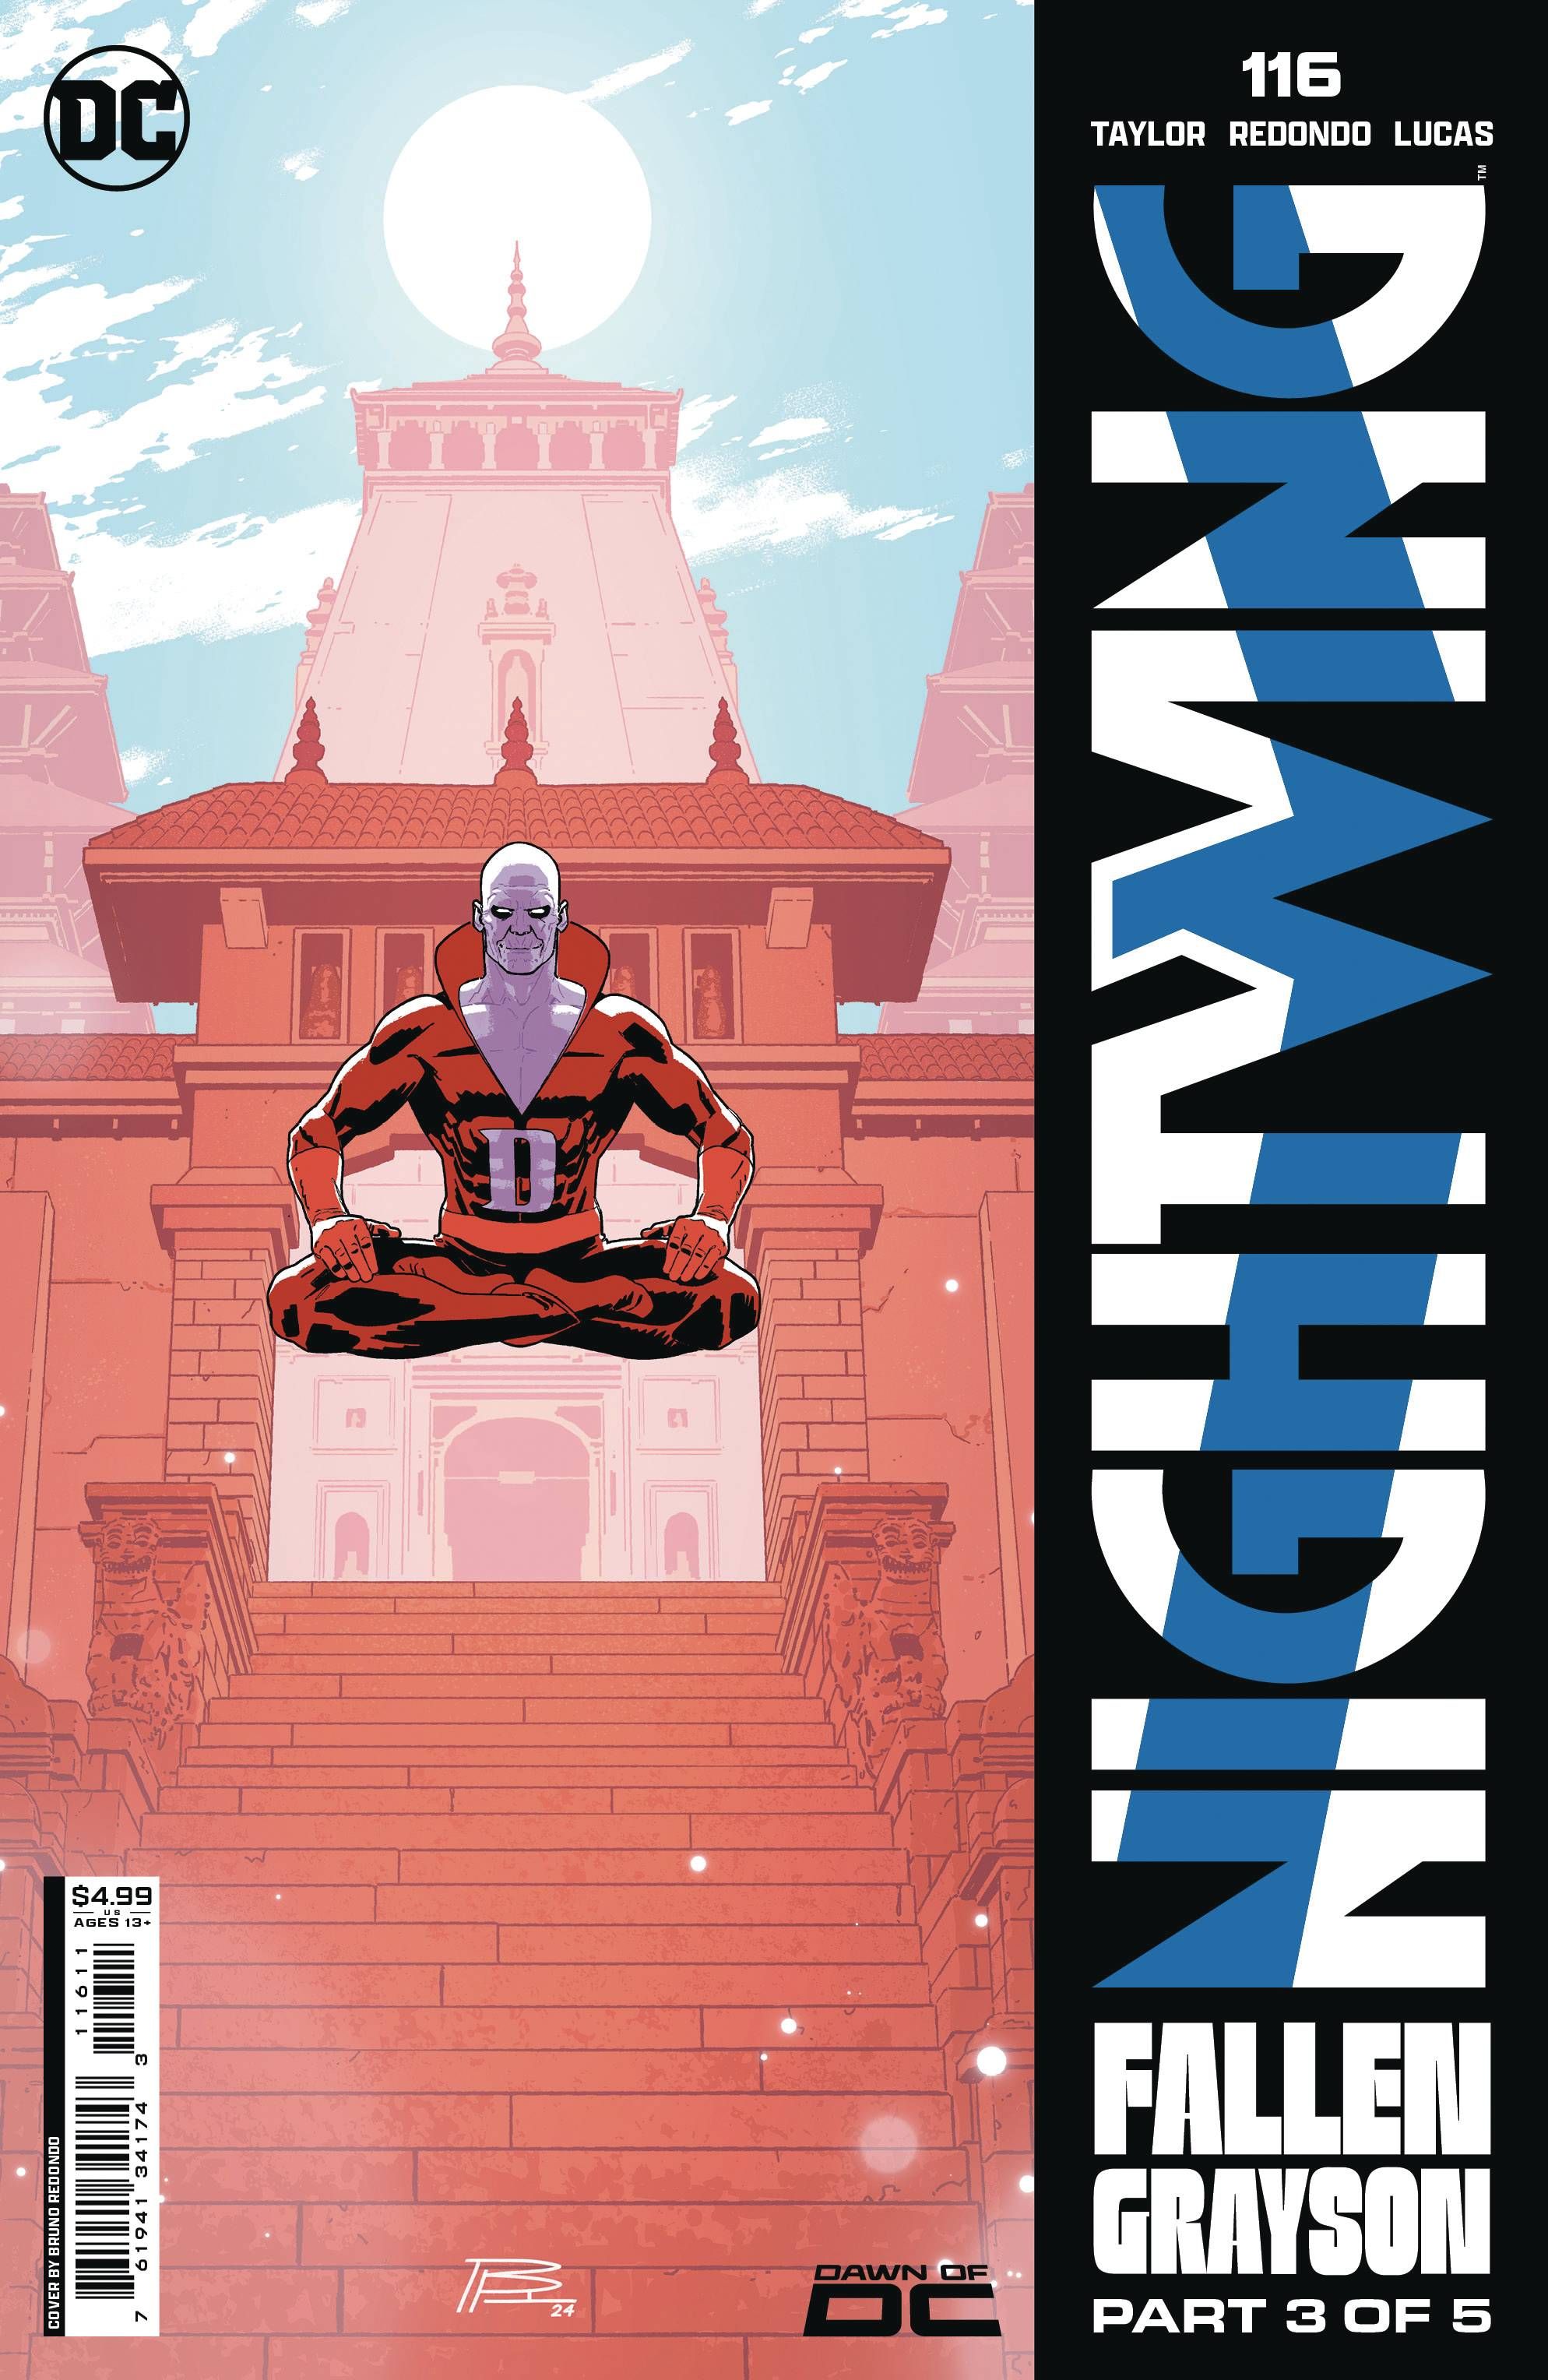 Capa principal do Nightwing 116: Deadman flutuando ao lado de um logotipo vertical do Nightwing.